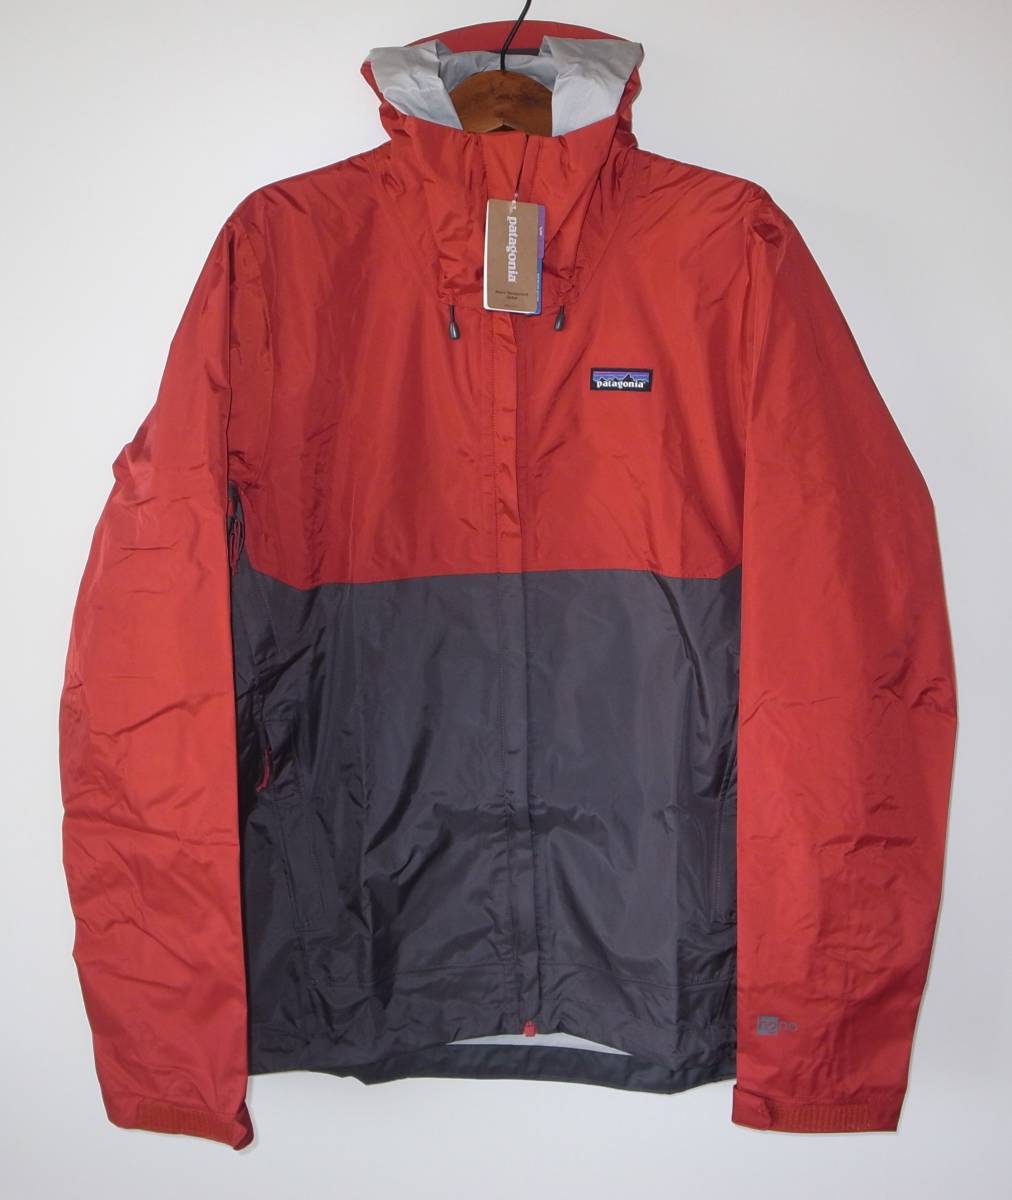 patagonia パタゴニア torrentshell jacket トレントシェル ジャケット sizeS red